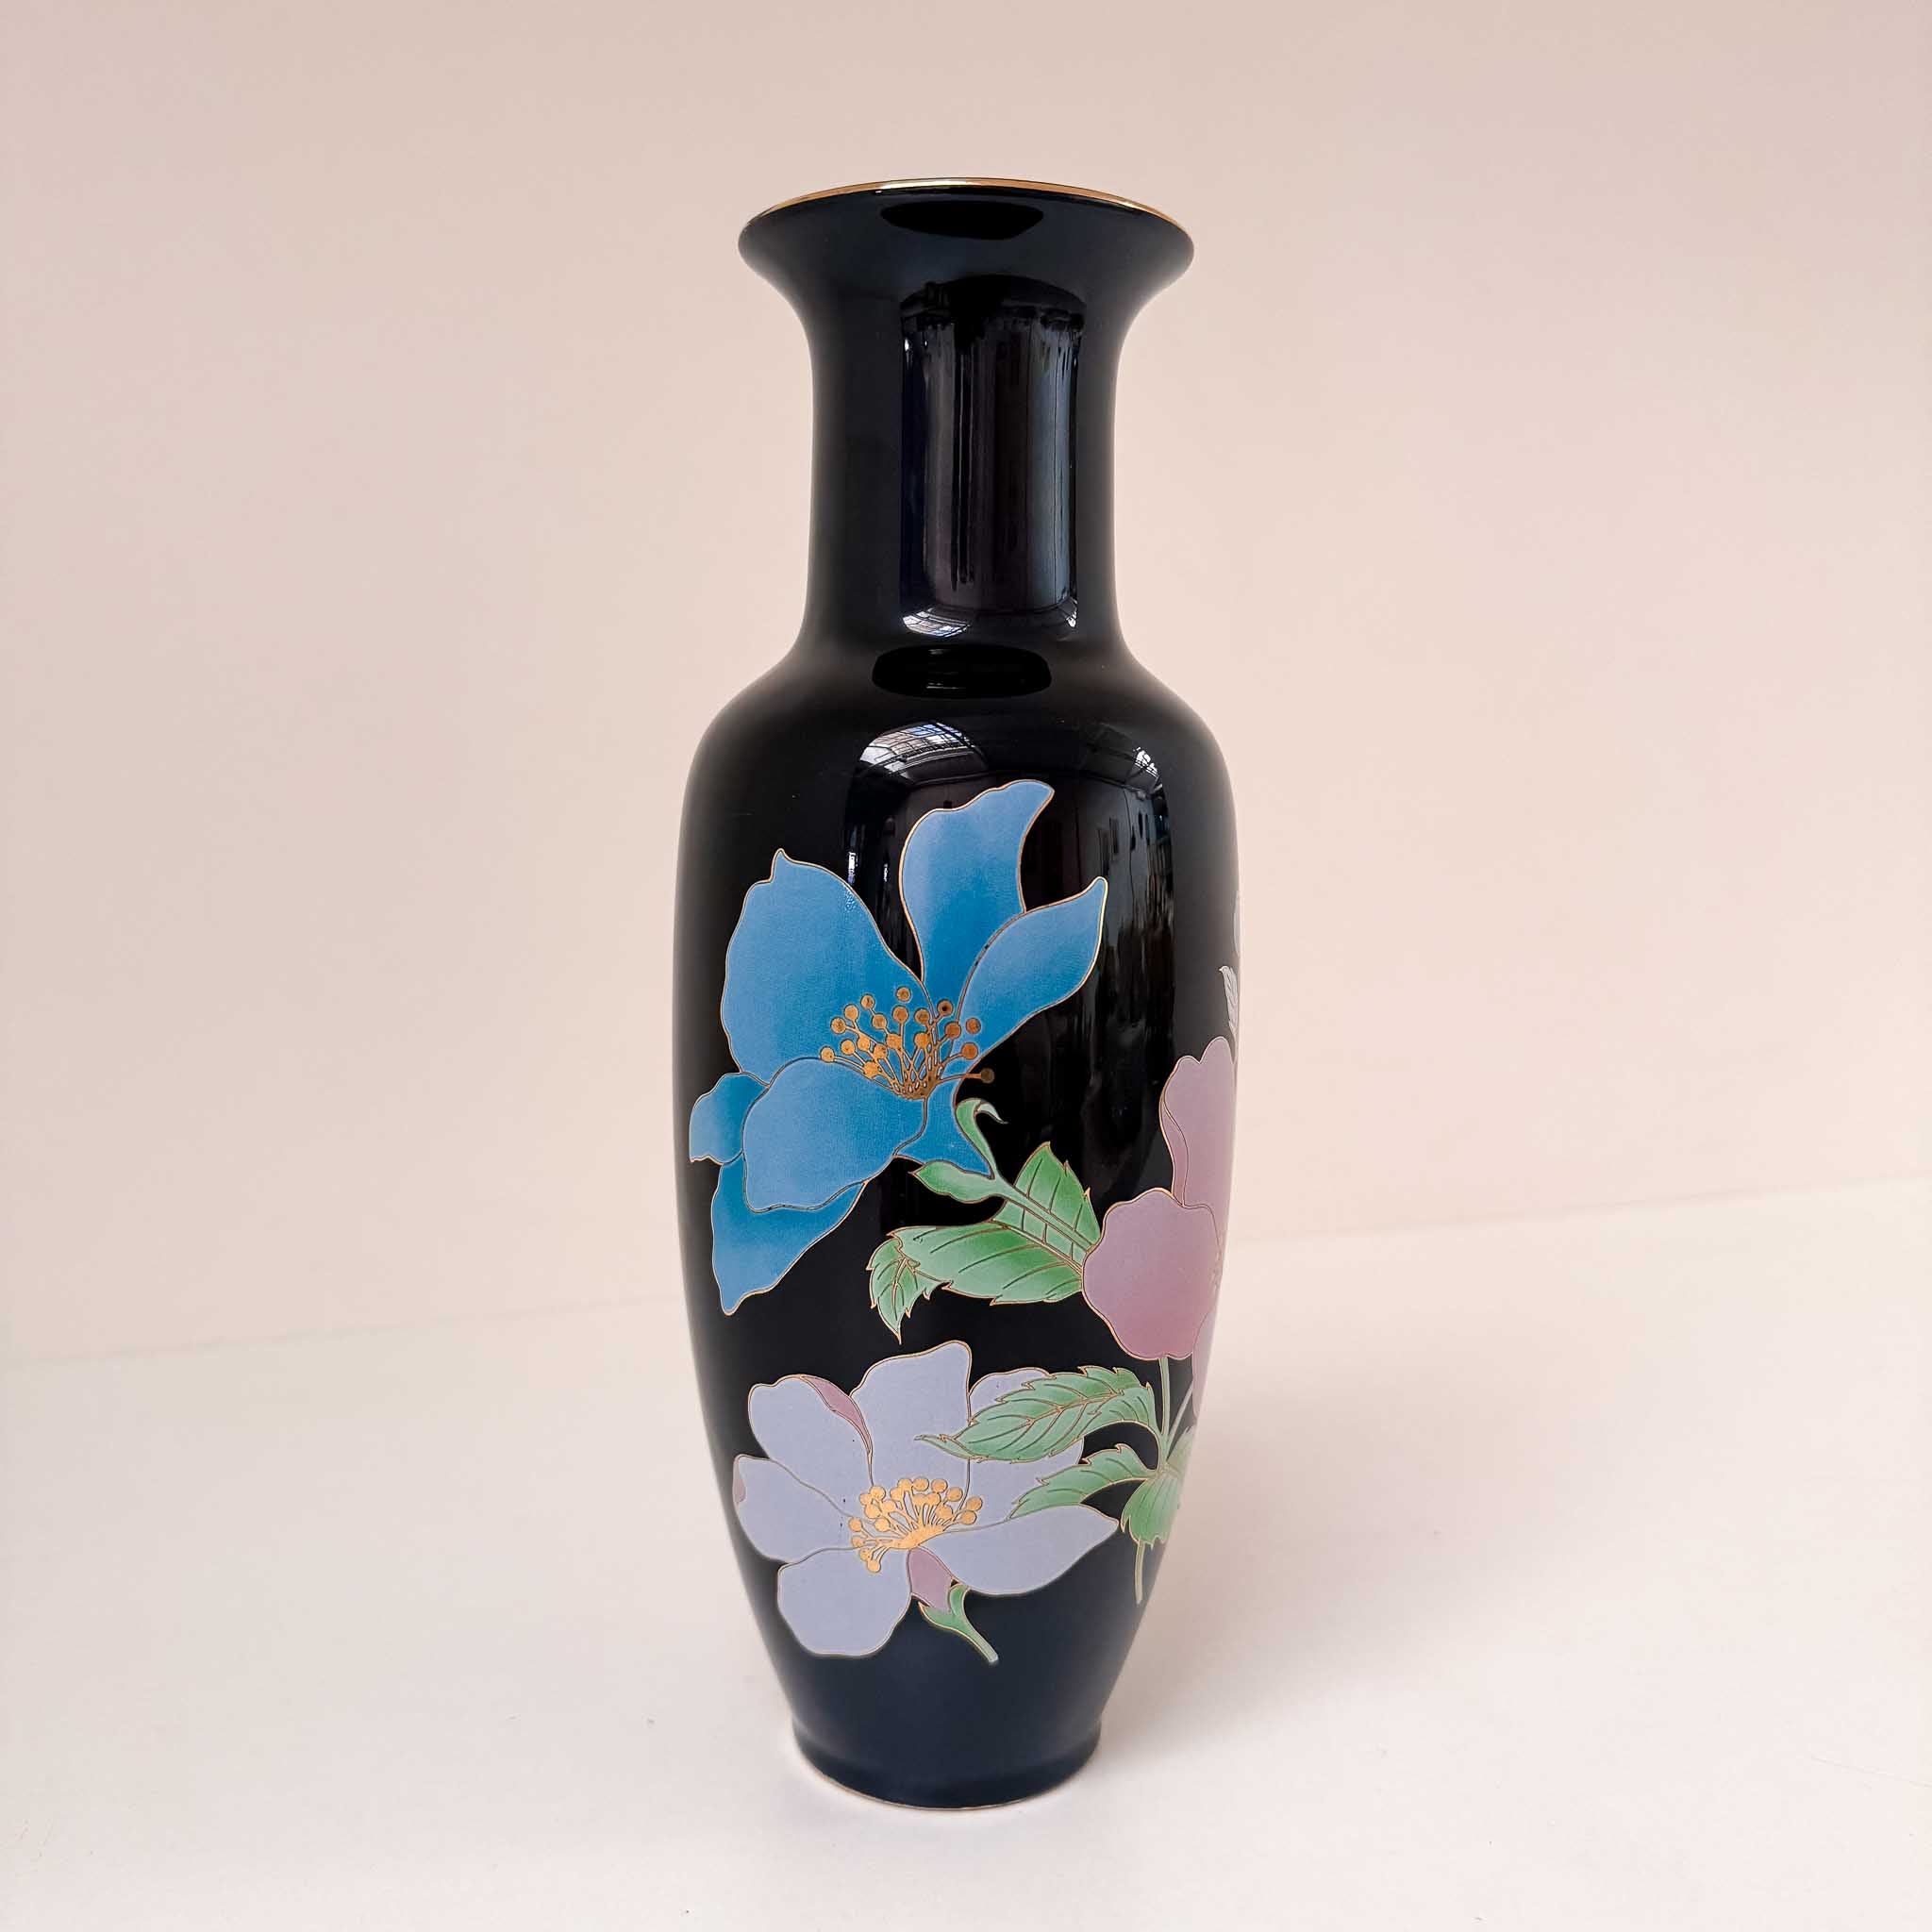 Vintage 80's Japanese Vase, Black with Flowers